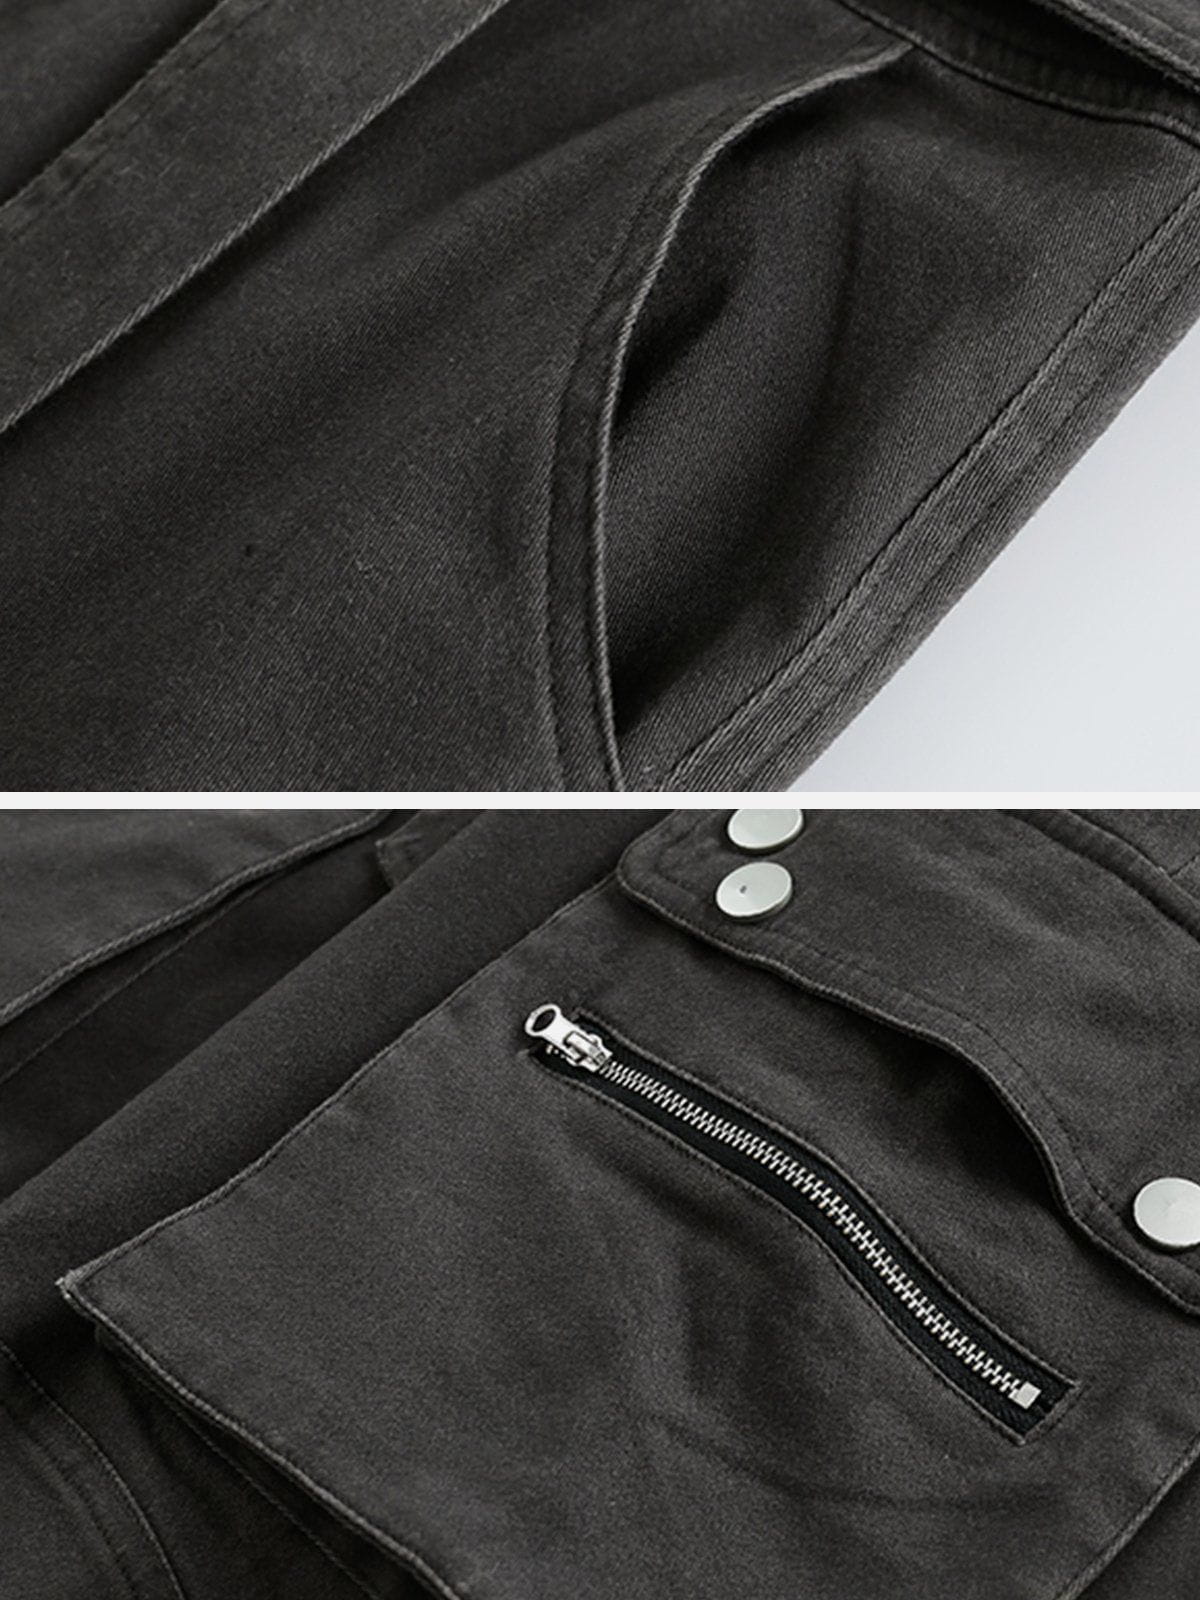 Sneakerland® - Waistband Multi-Pocket Cargo Pants